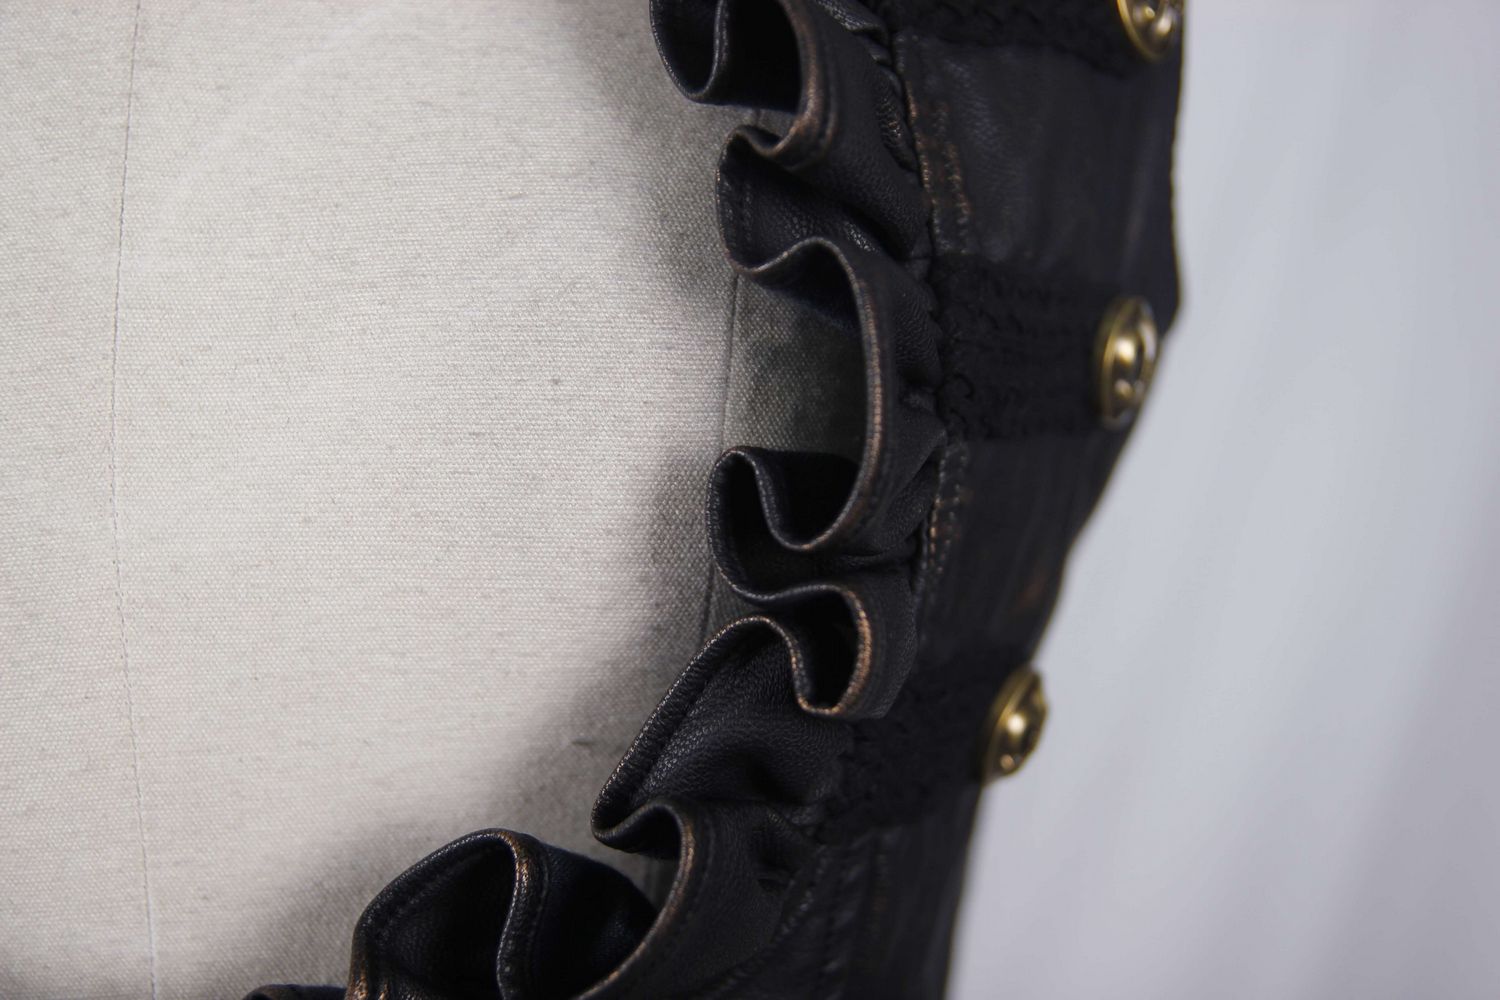 Stylish Women's Steampunk PU Leather Waistcoat With Leather Frills / Female Alternative Clothing